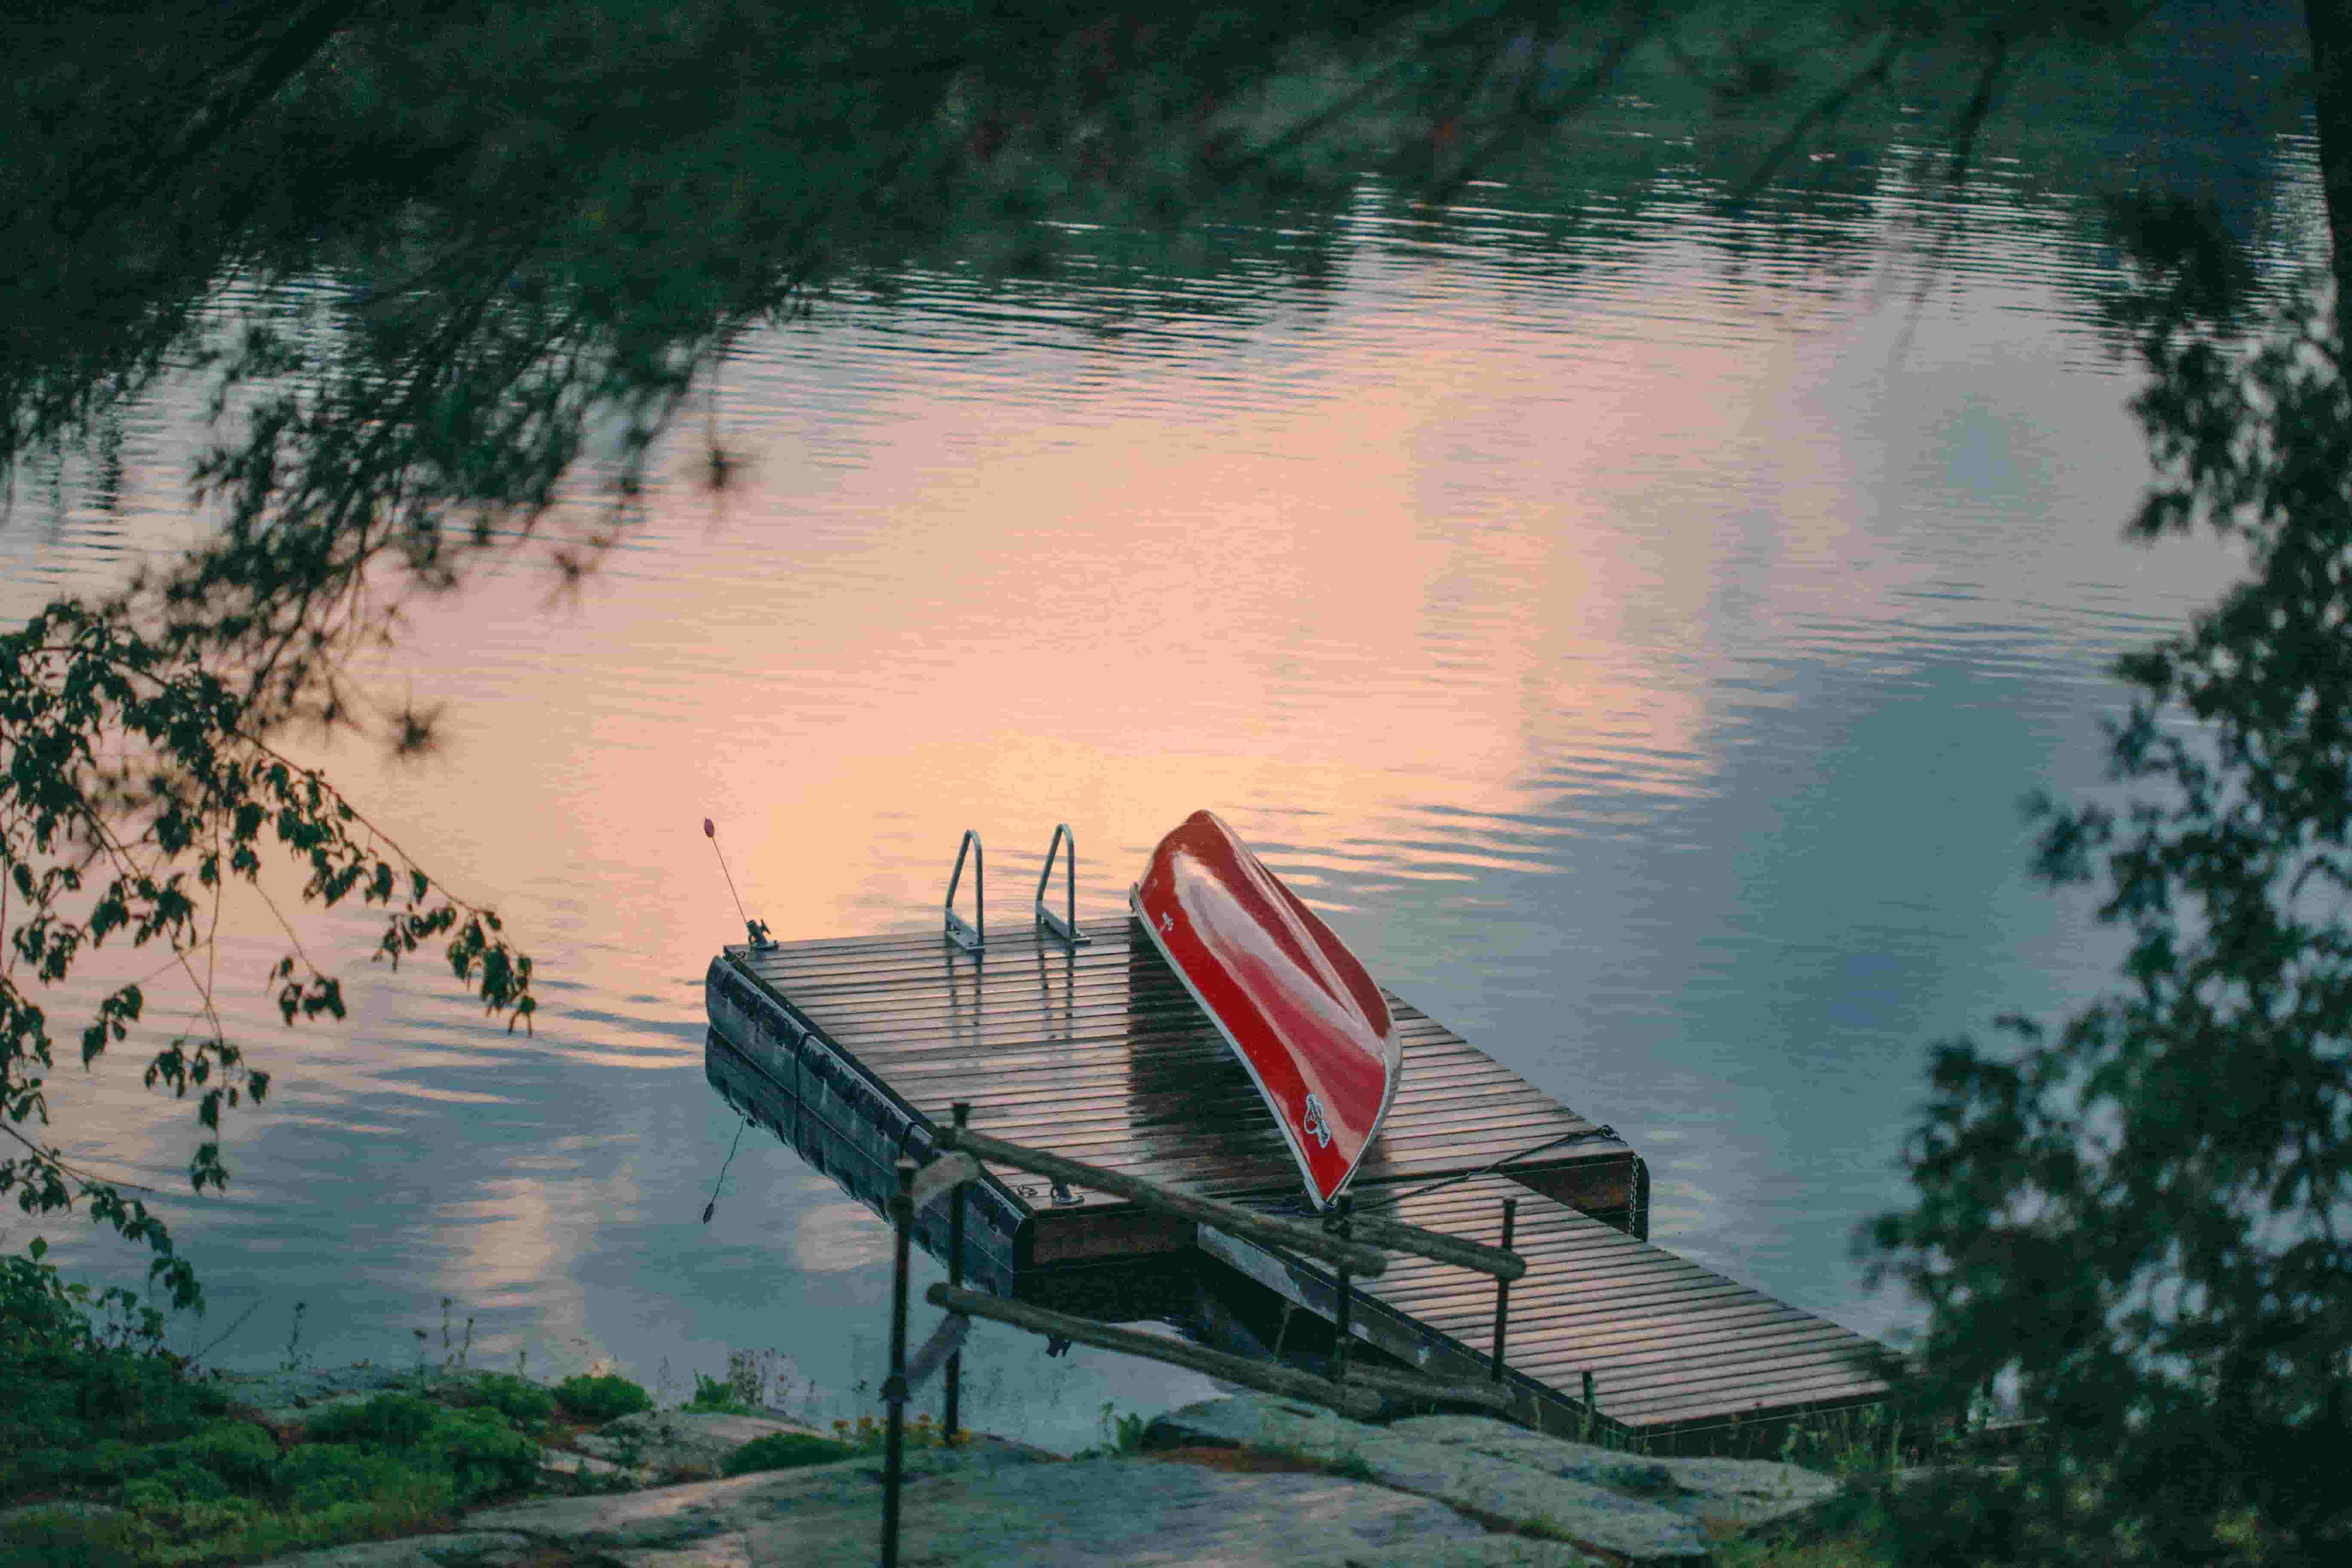 Canoe sitting on the docks.